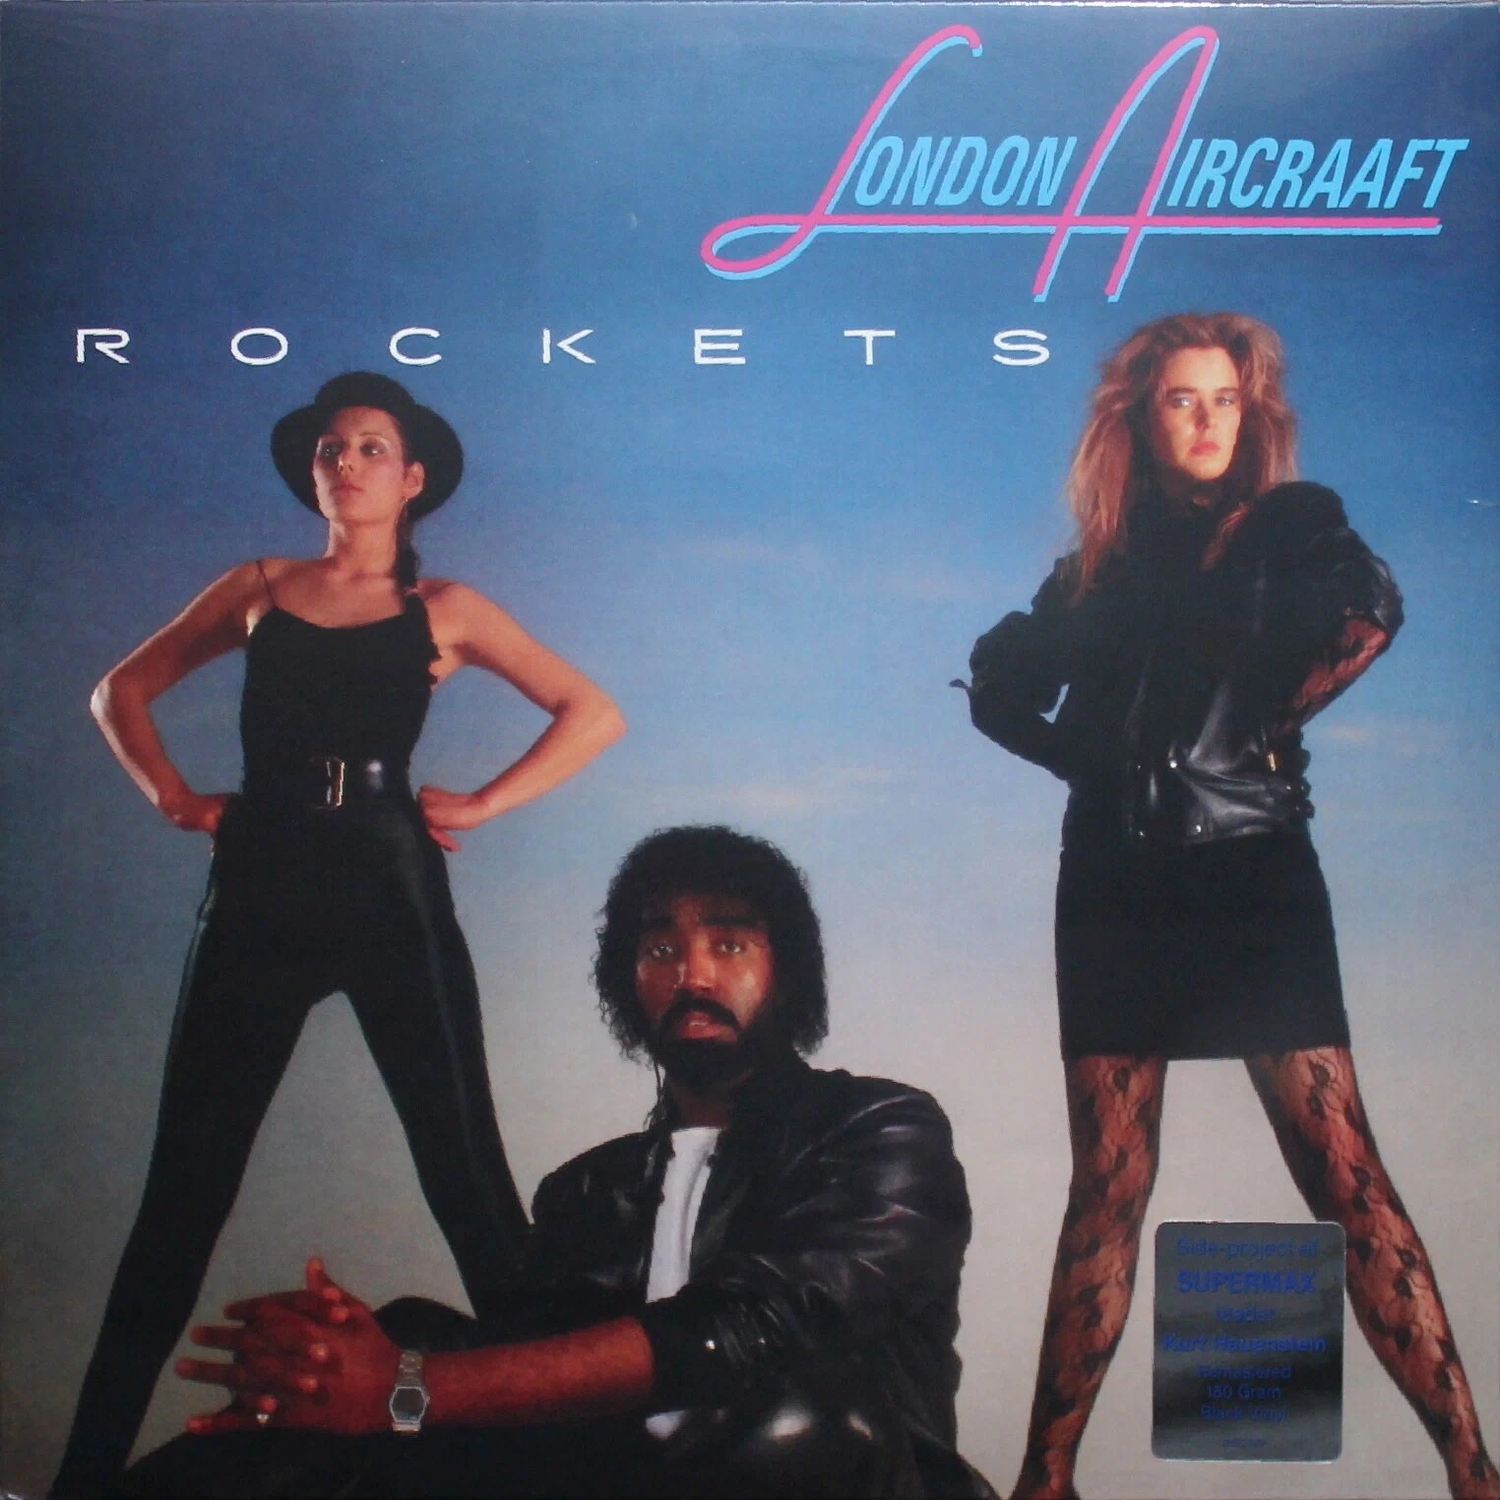 Виниловая Пластинка London Aircraaft Rockets (4601620108716)